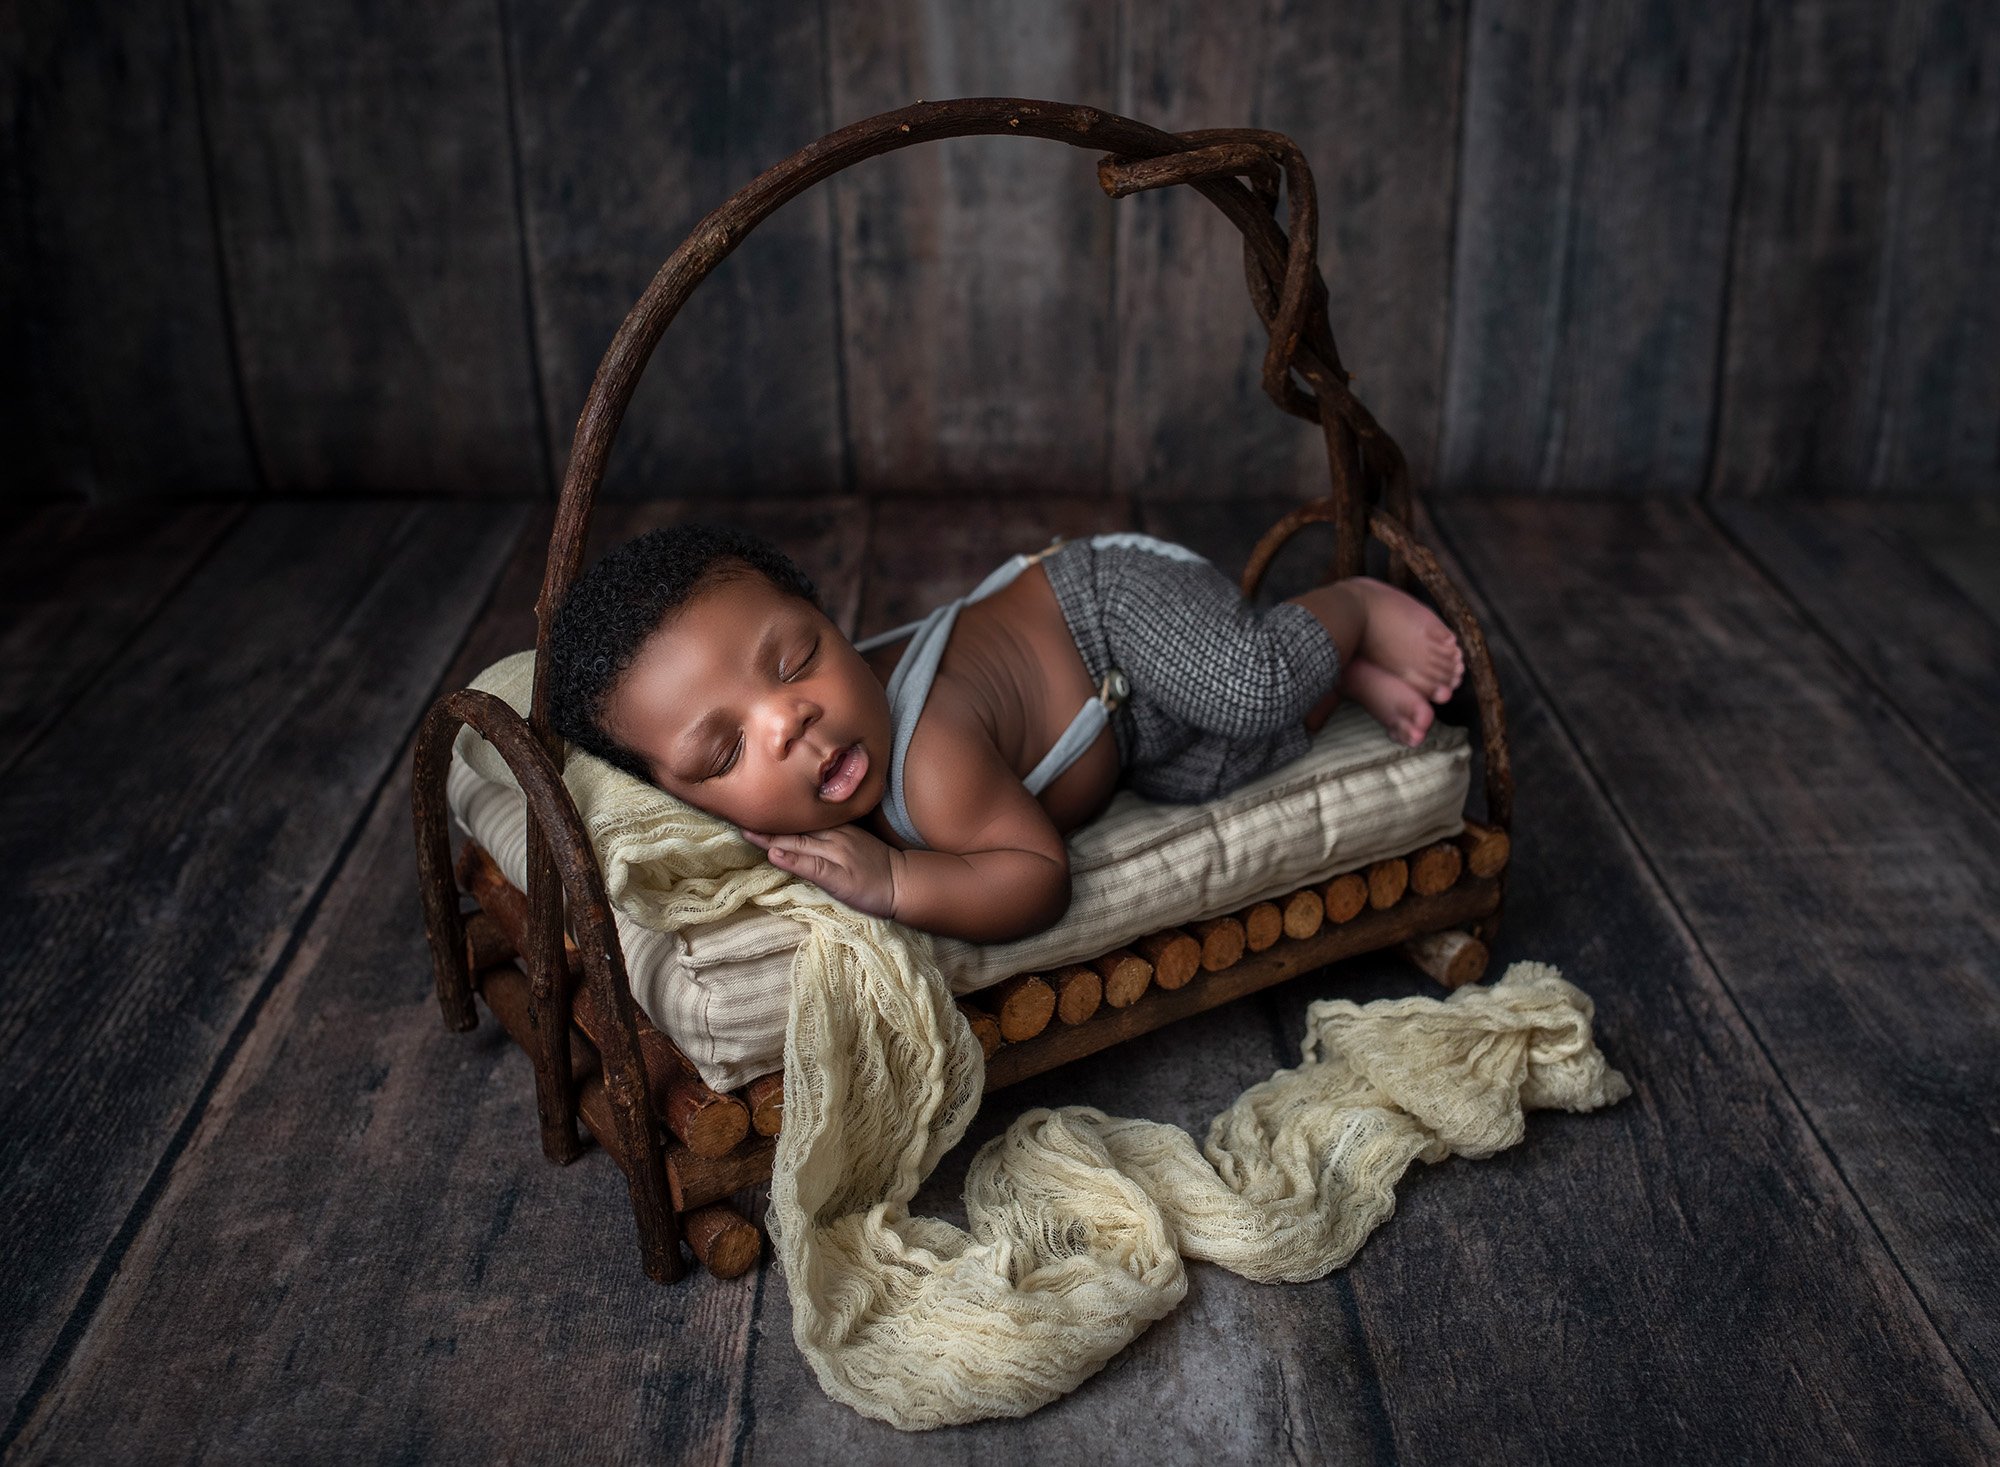 Jamaican boy newborn photographs newborn baby boy asleep in trousers on top of wooden miniature bed